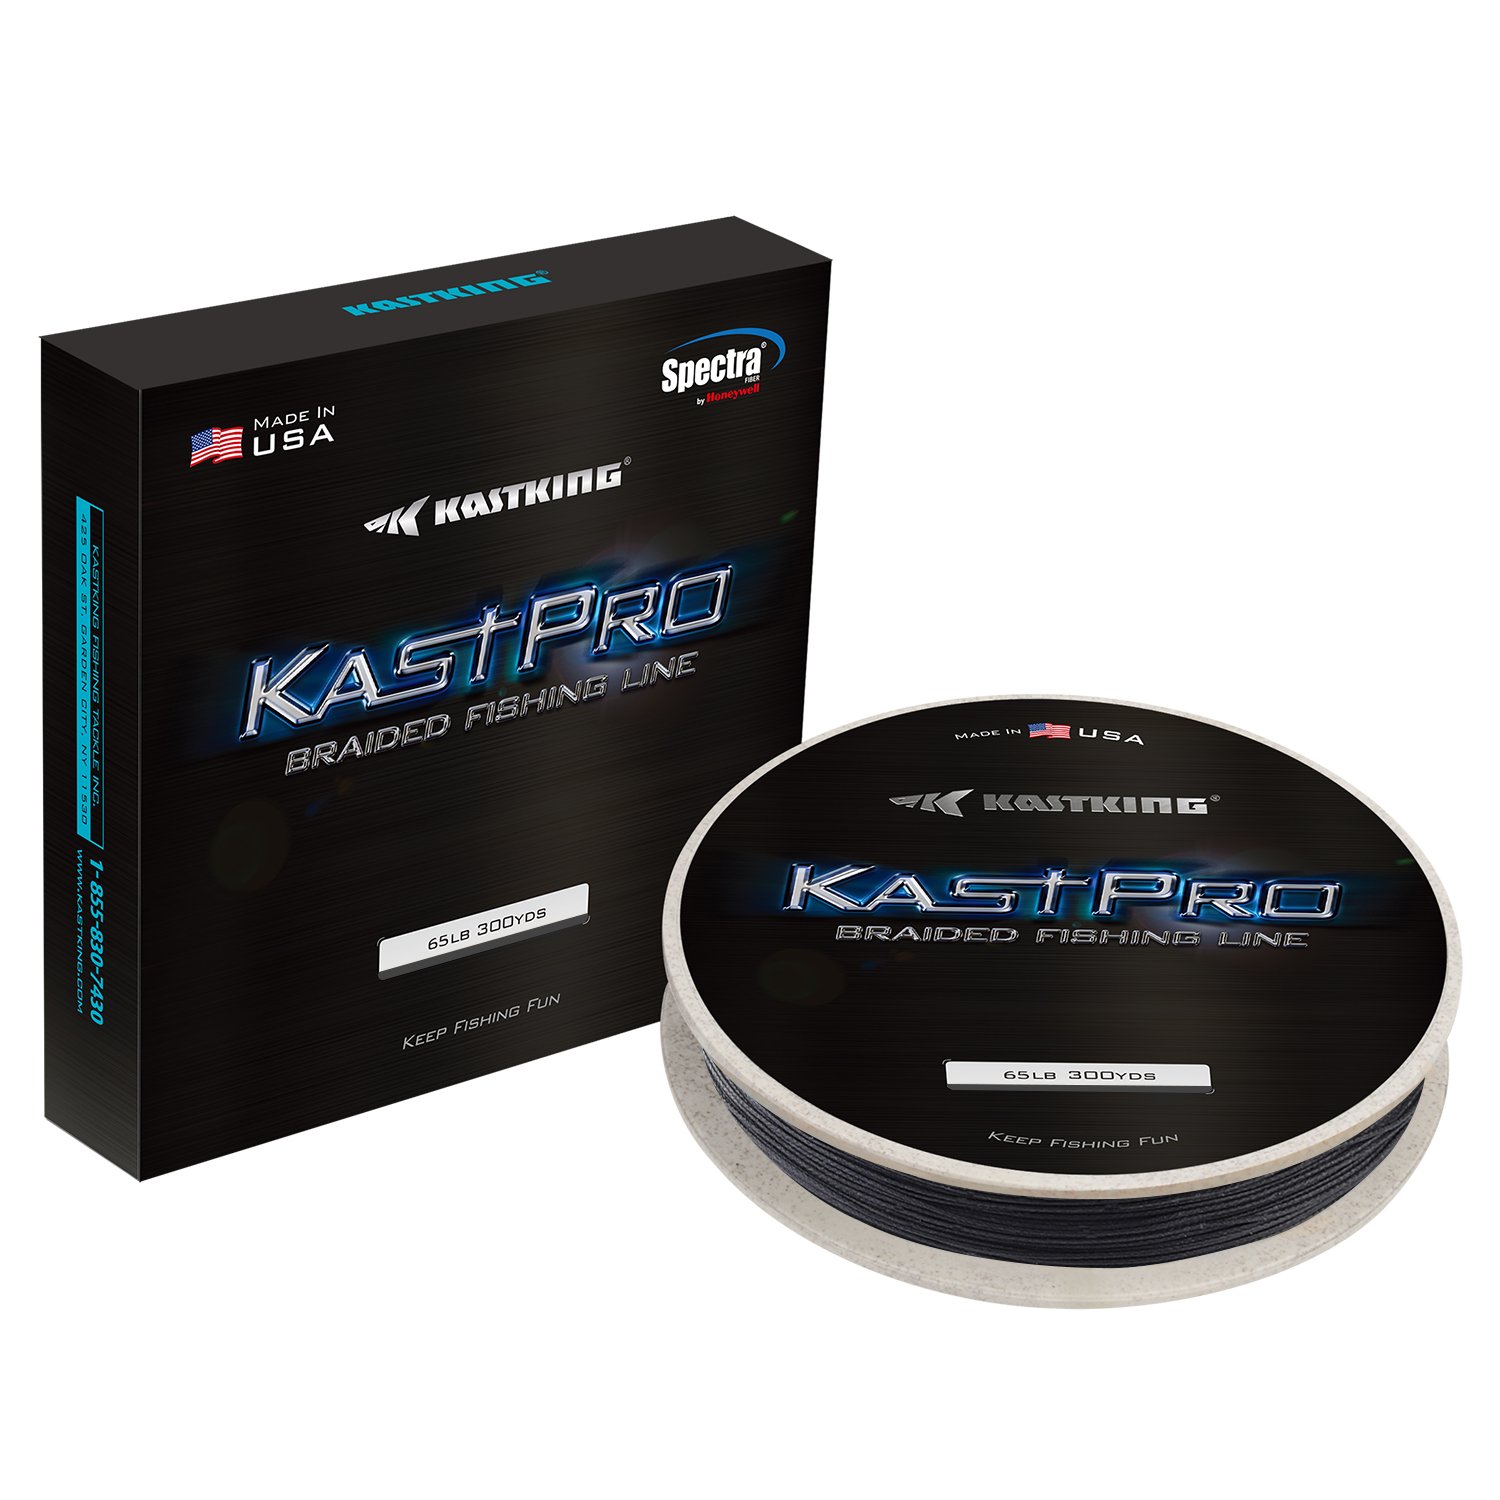 KastKing KastPro Braided Fishing Line - Spectra Super Line - Made